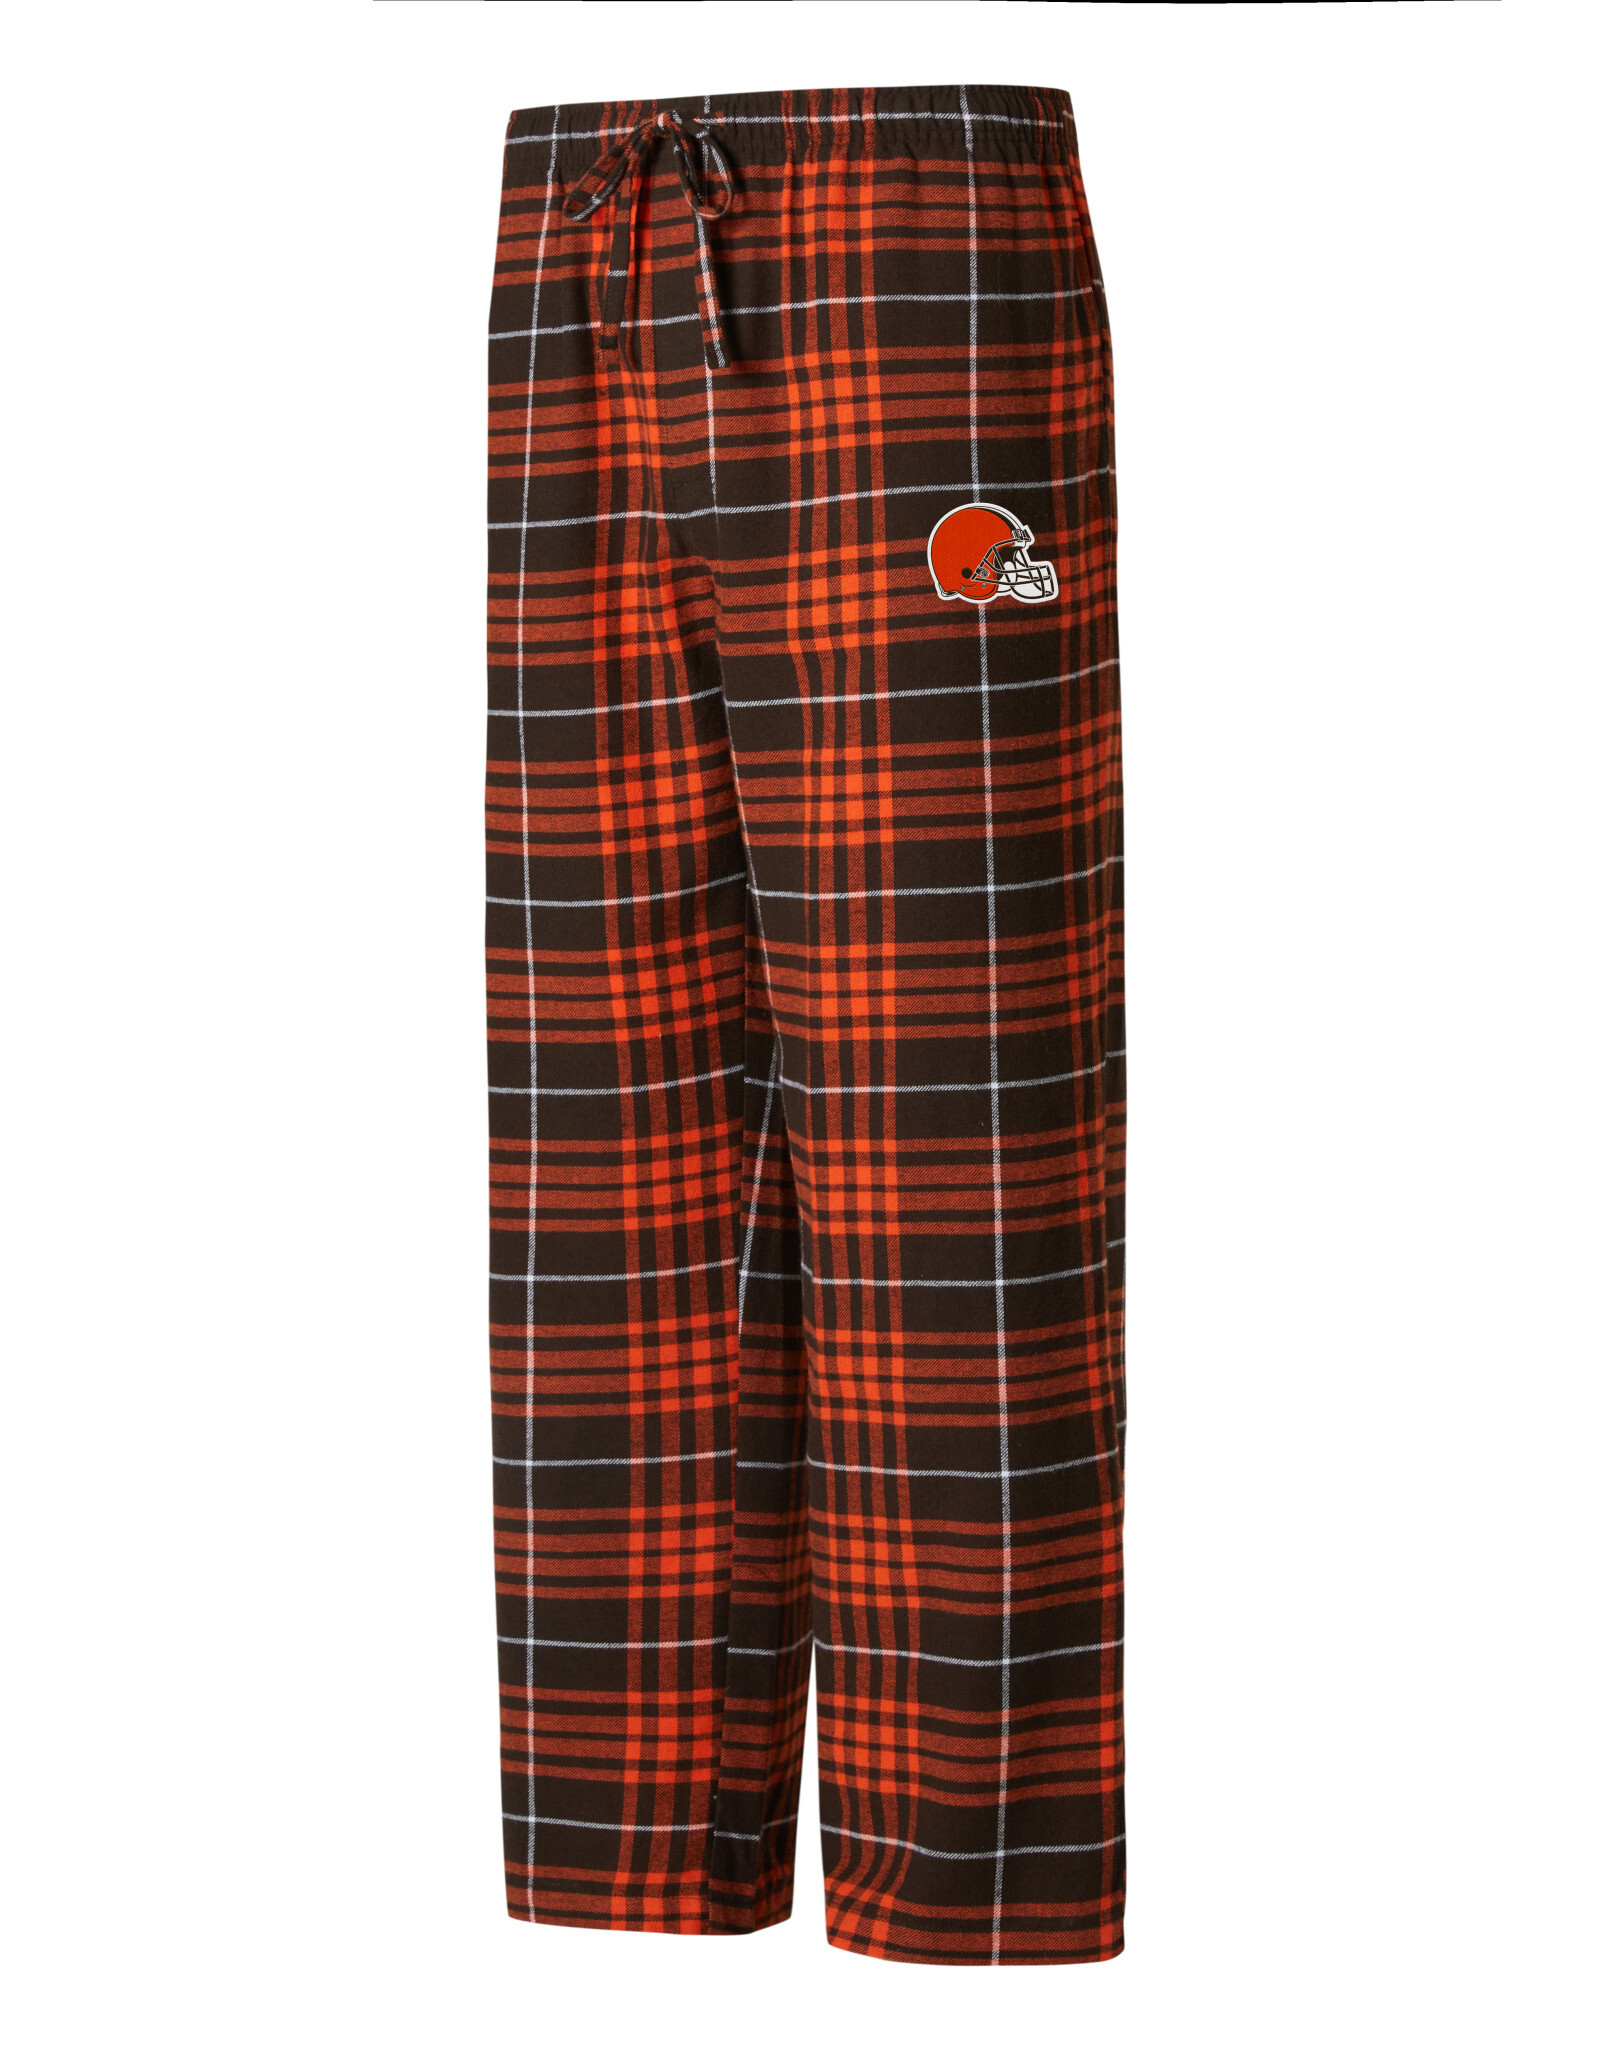 CONCEPTS SPORT Cleveland Browns Men's Concord Flannel Pant